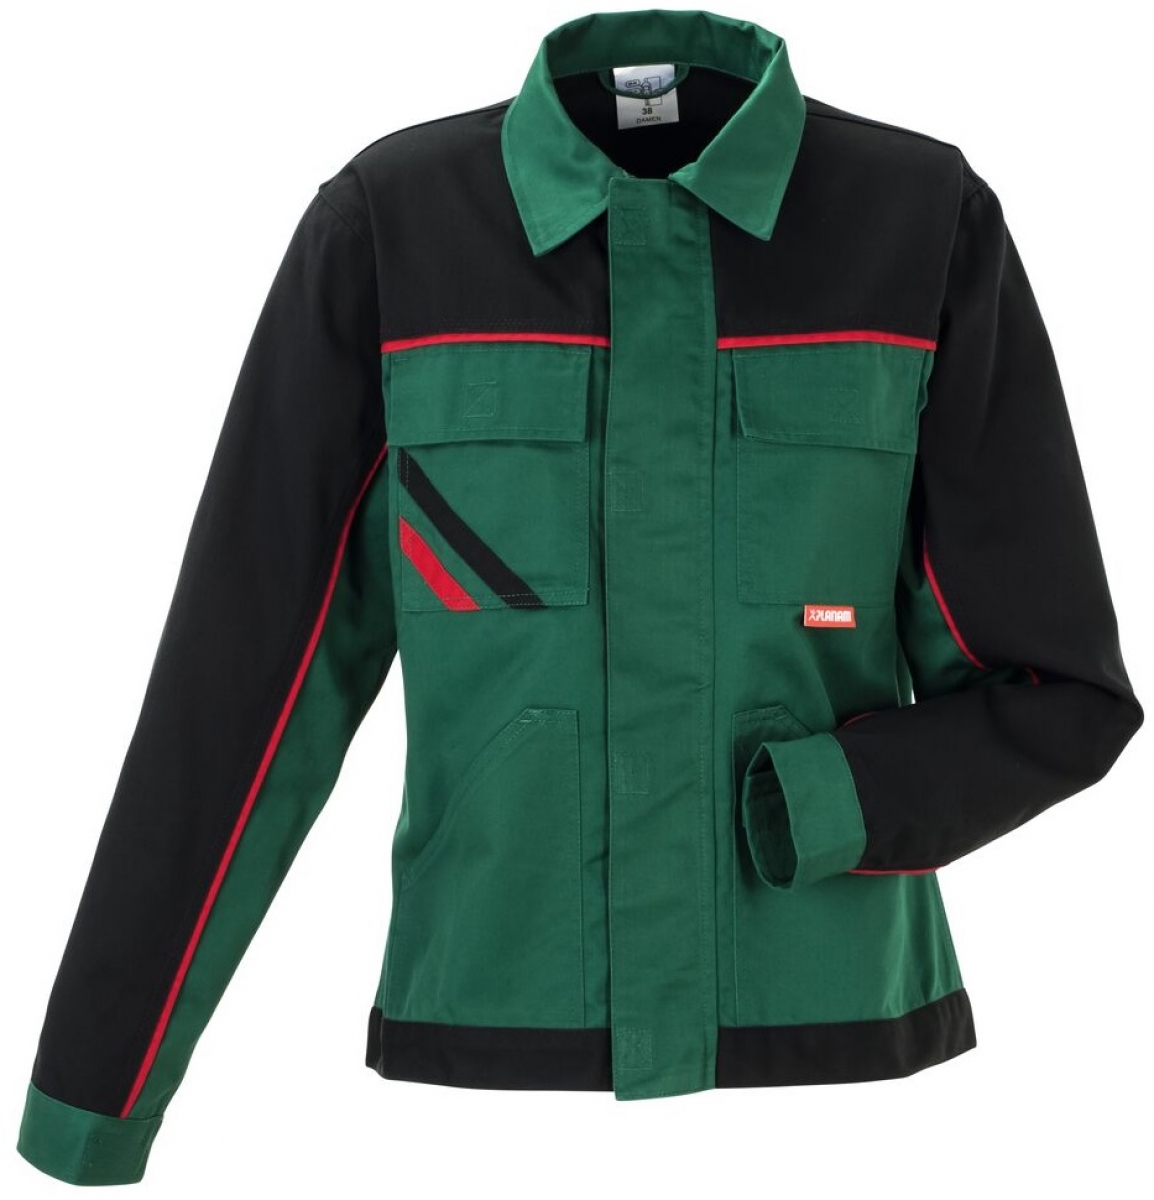 PLANAM-Workwear, Damen-Bundjacke, Highline, 285 g/m, grn/schwarz/rot